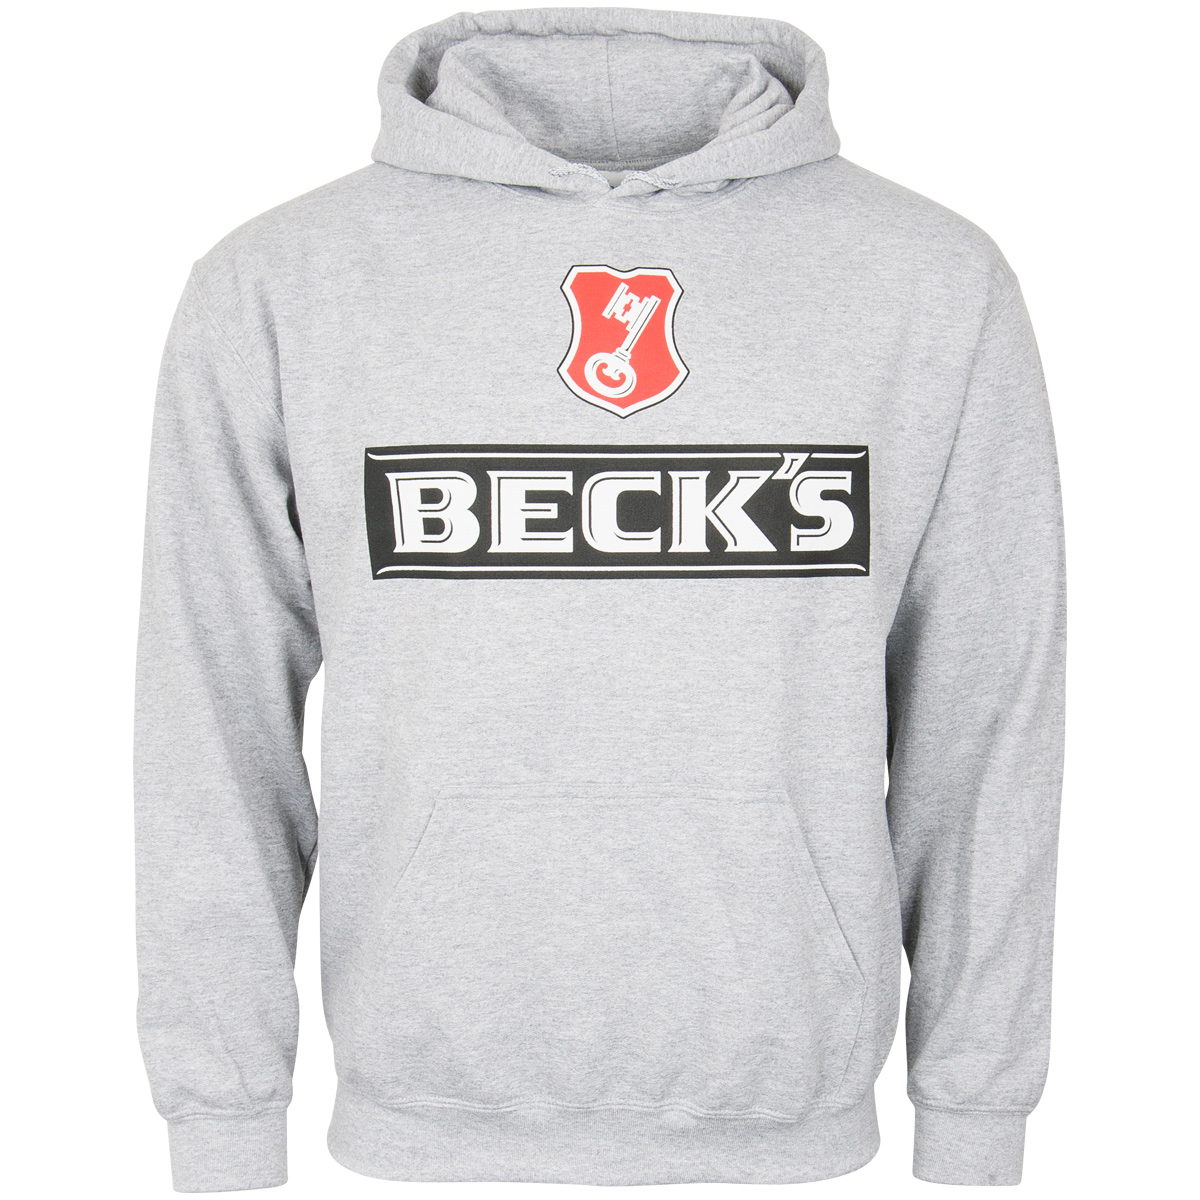 Beck's - Kapuzenpullover Logo - grau